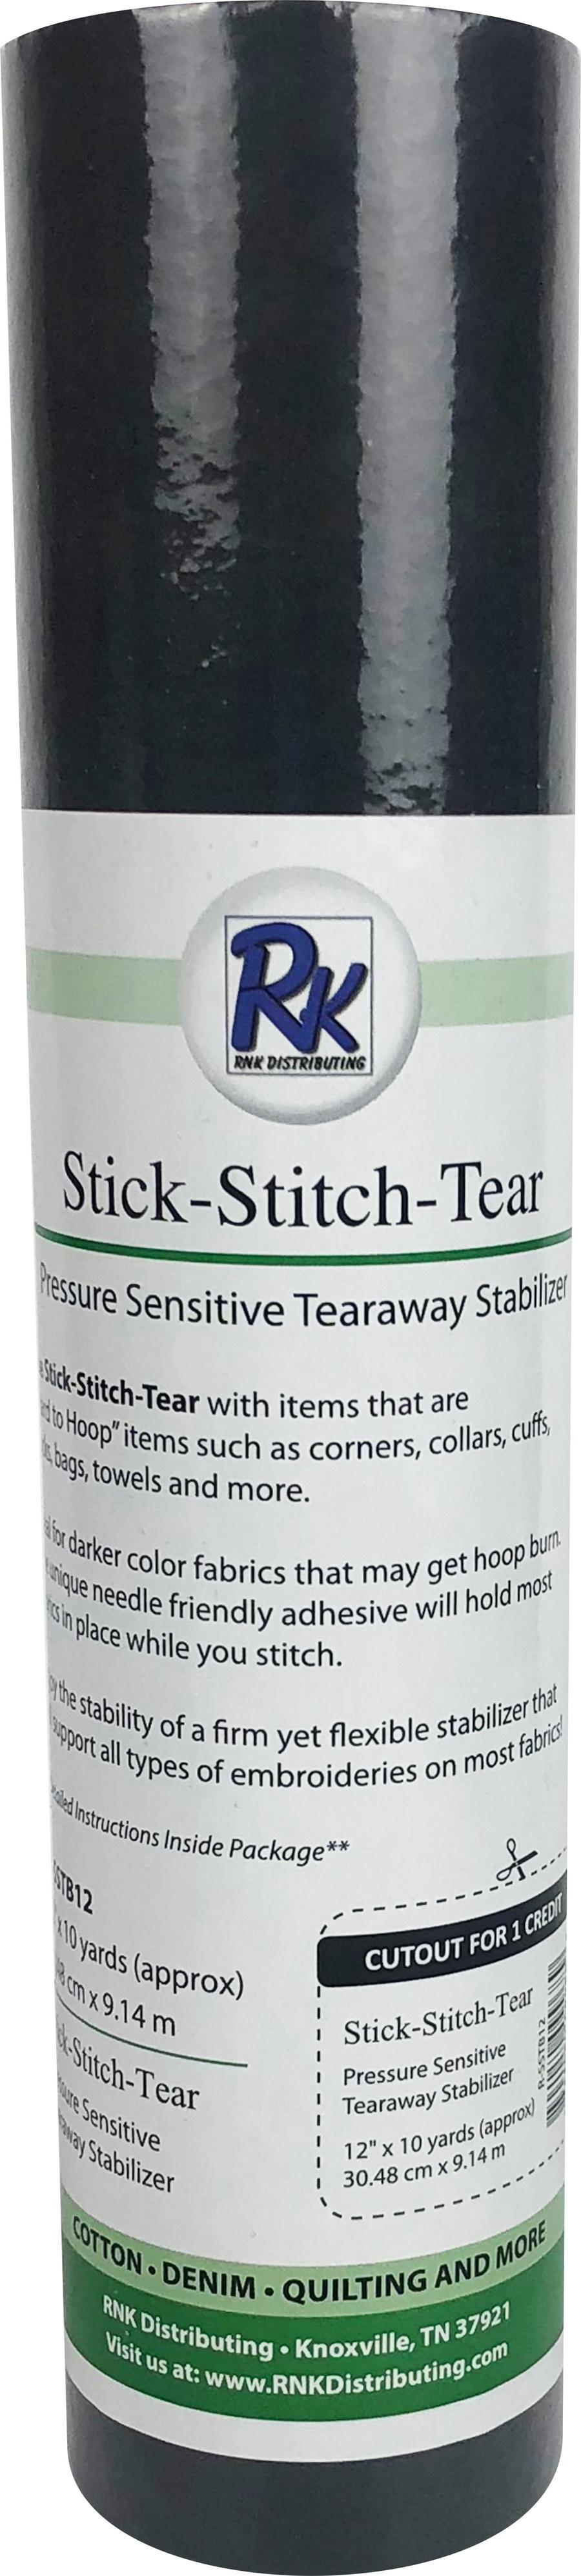 RNK Distributing Stick-Stitch-Tear Stabilzer (BLACK)